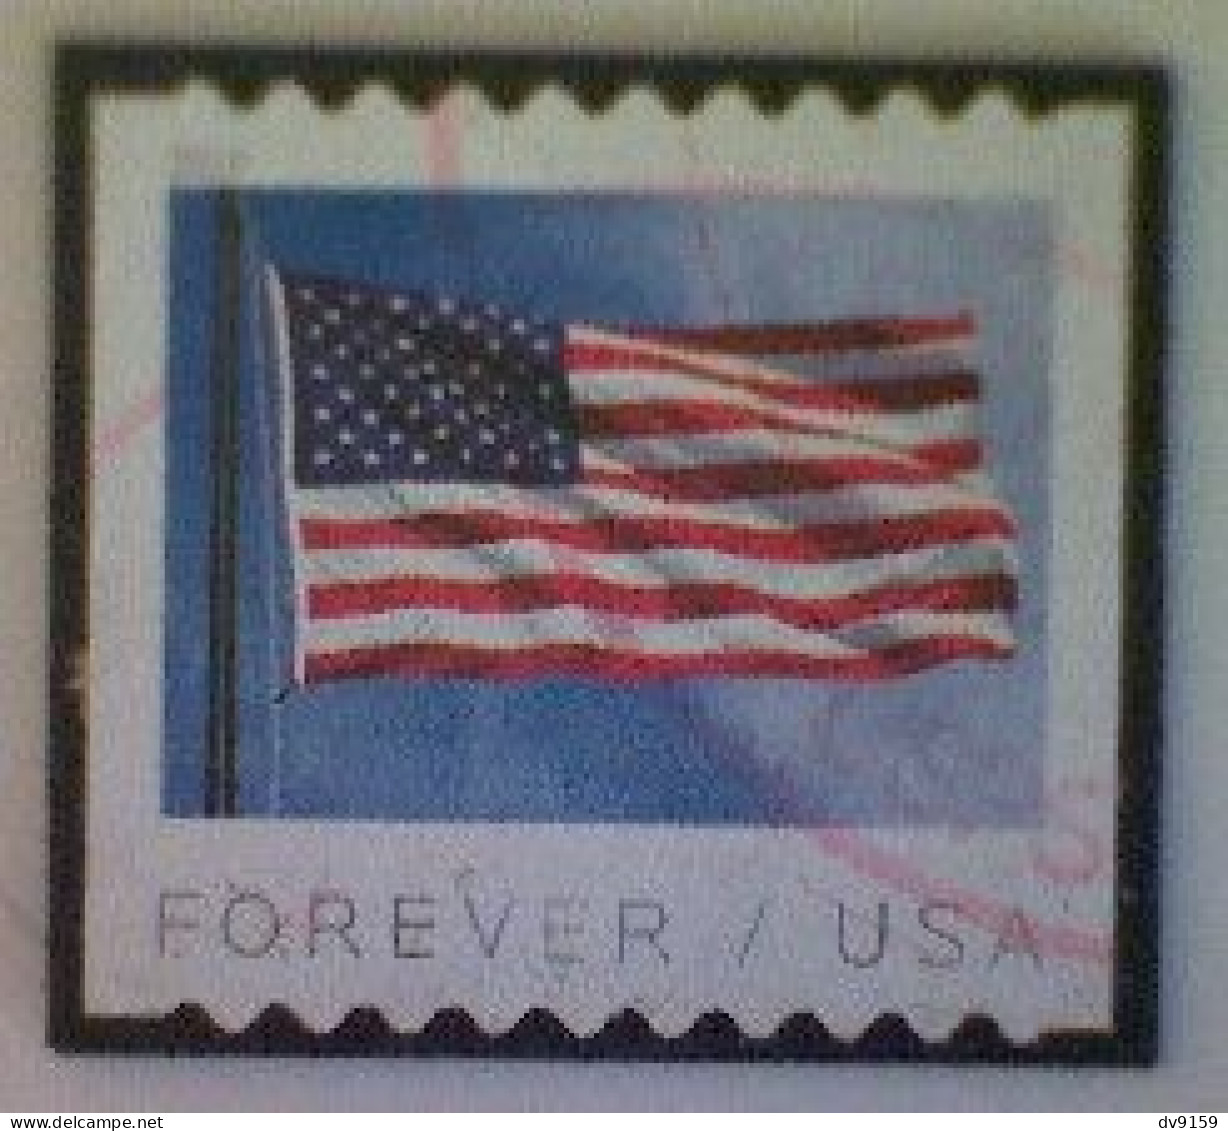 United States, Scott #5342, Used(o) Coil, 2019, Flag Definitive, (55¢) - Gebraucht